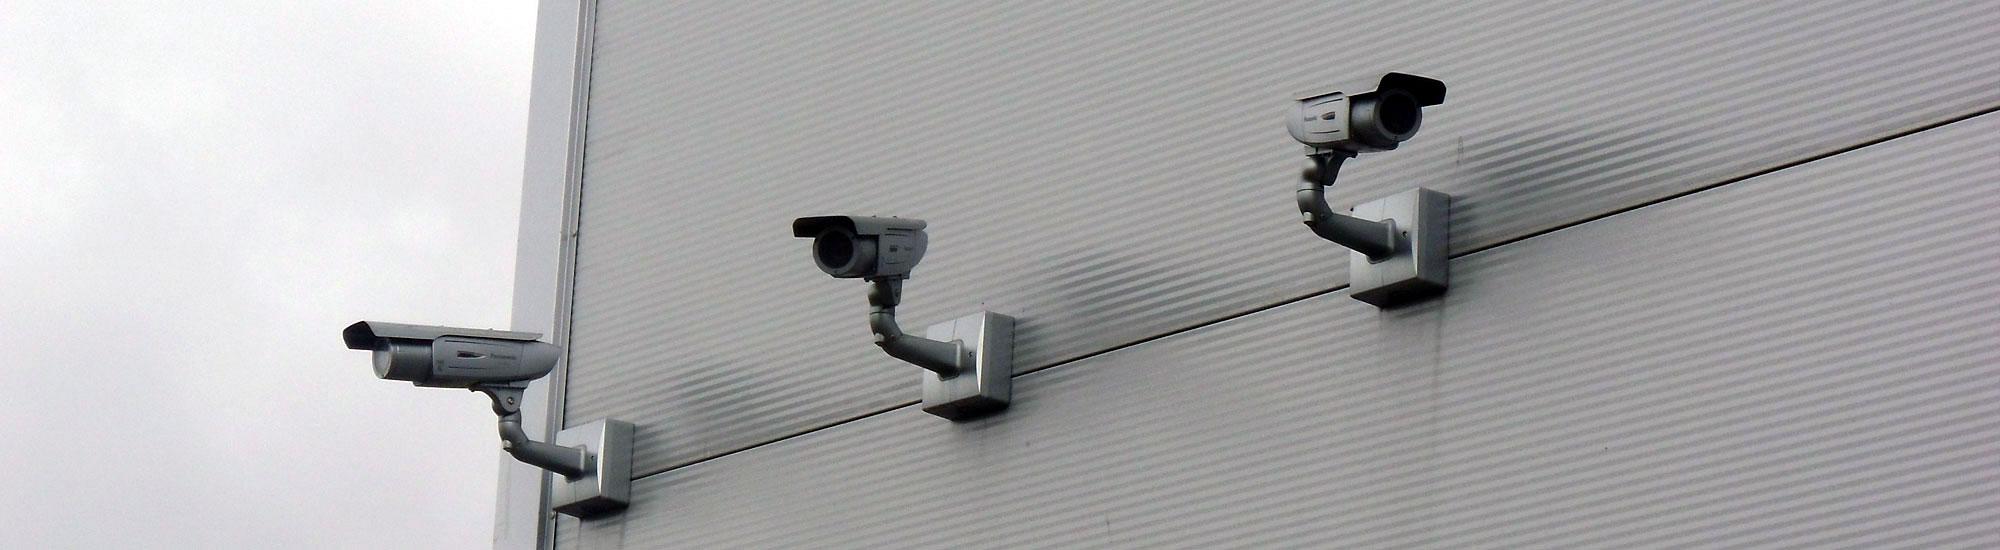 CCTV Installers Dublin